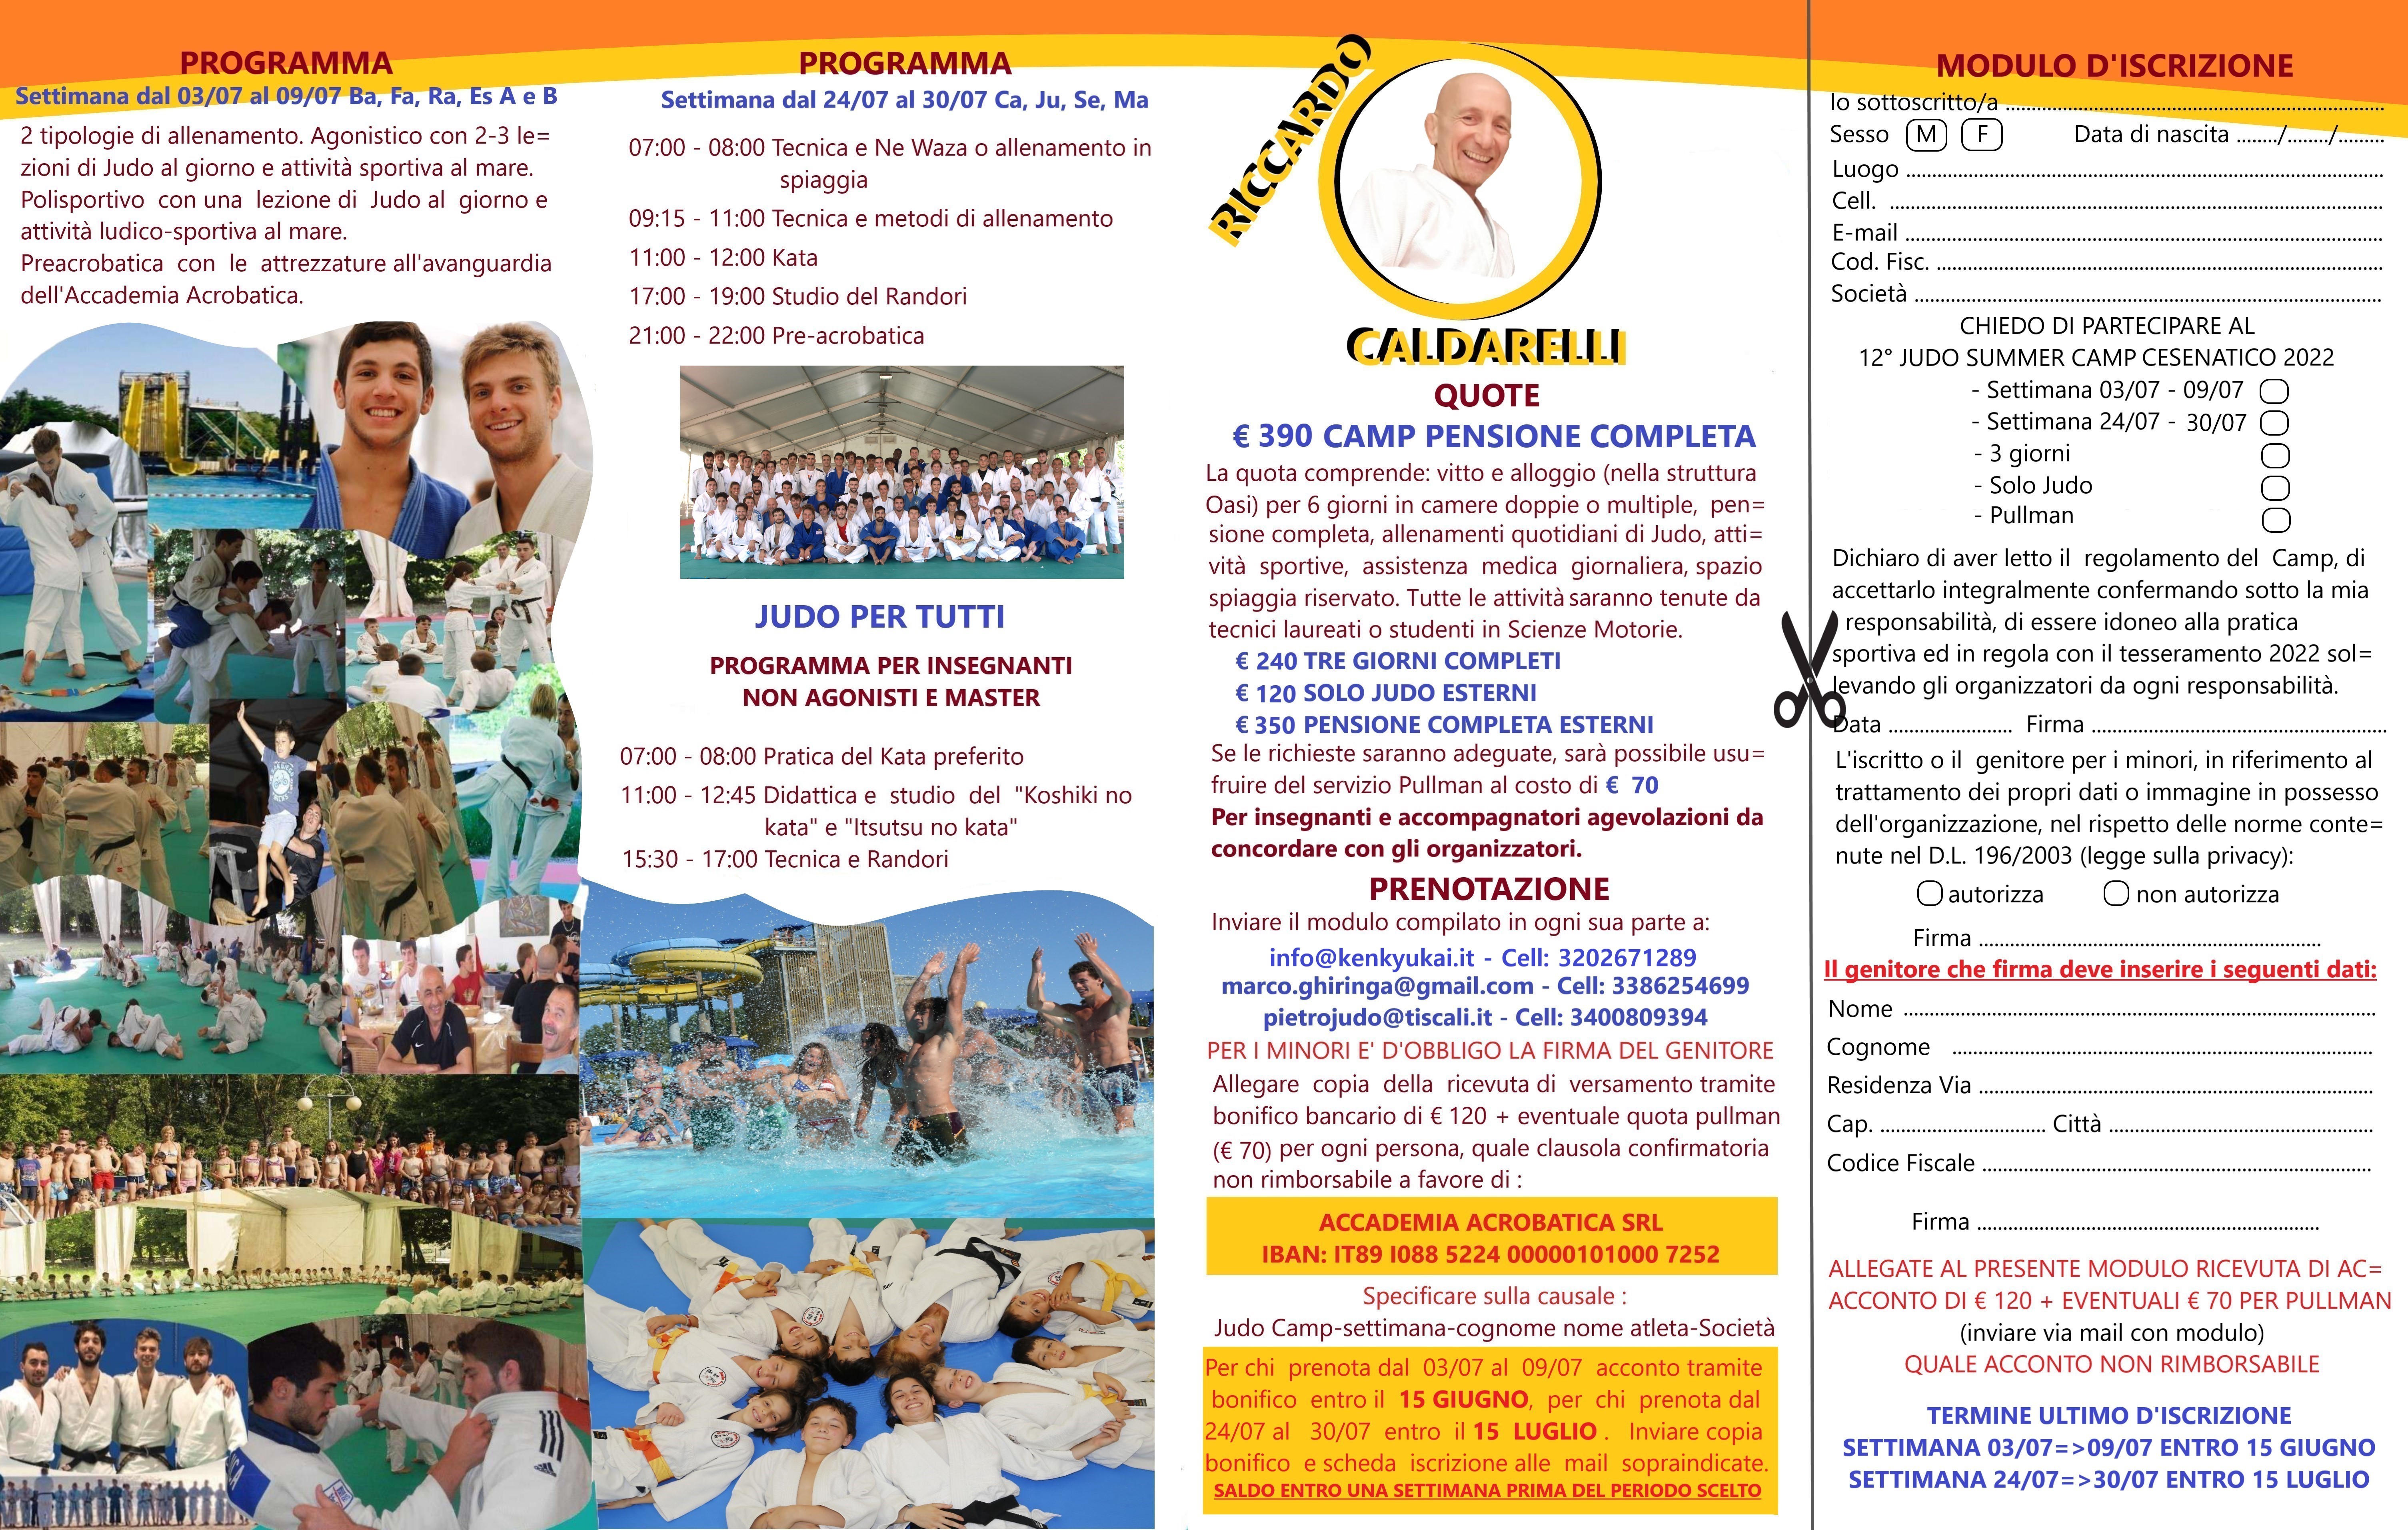 pag-2-12-judo-summer-camp-2022-memorial-pitrelli